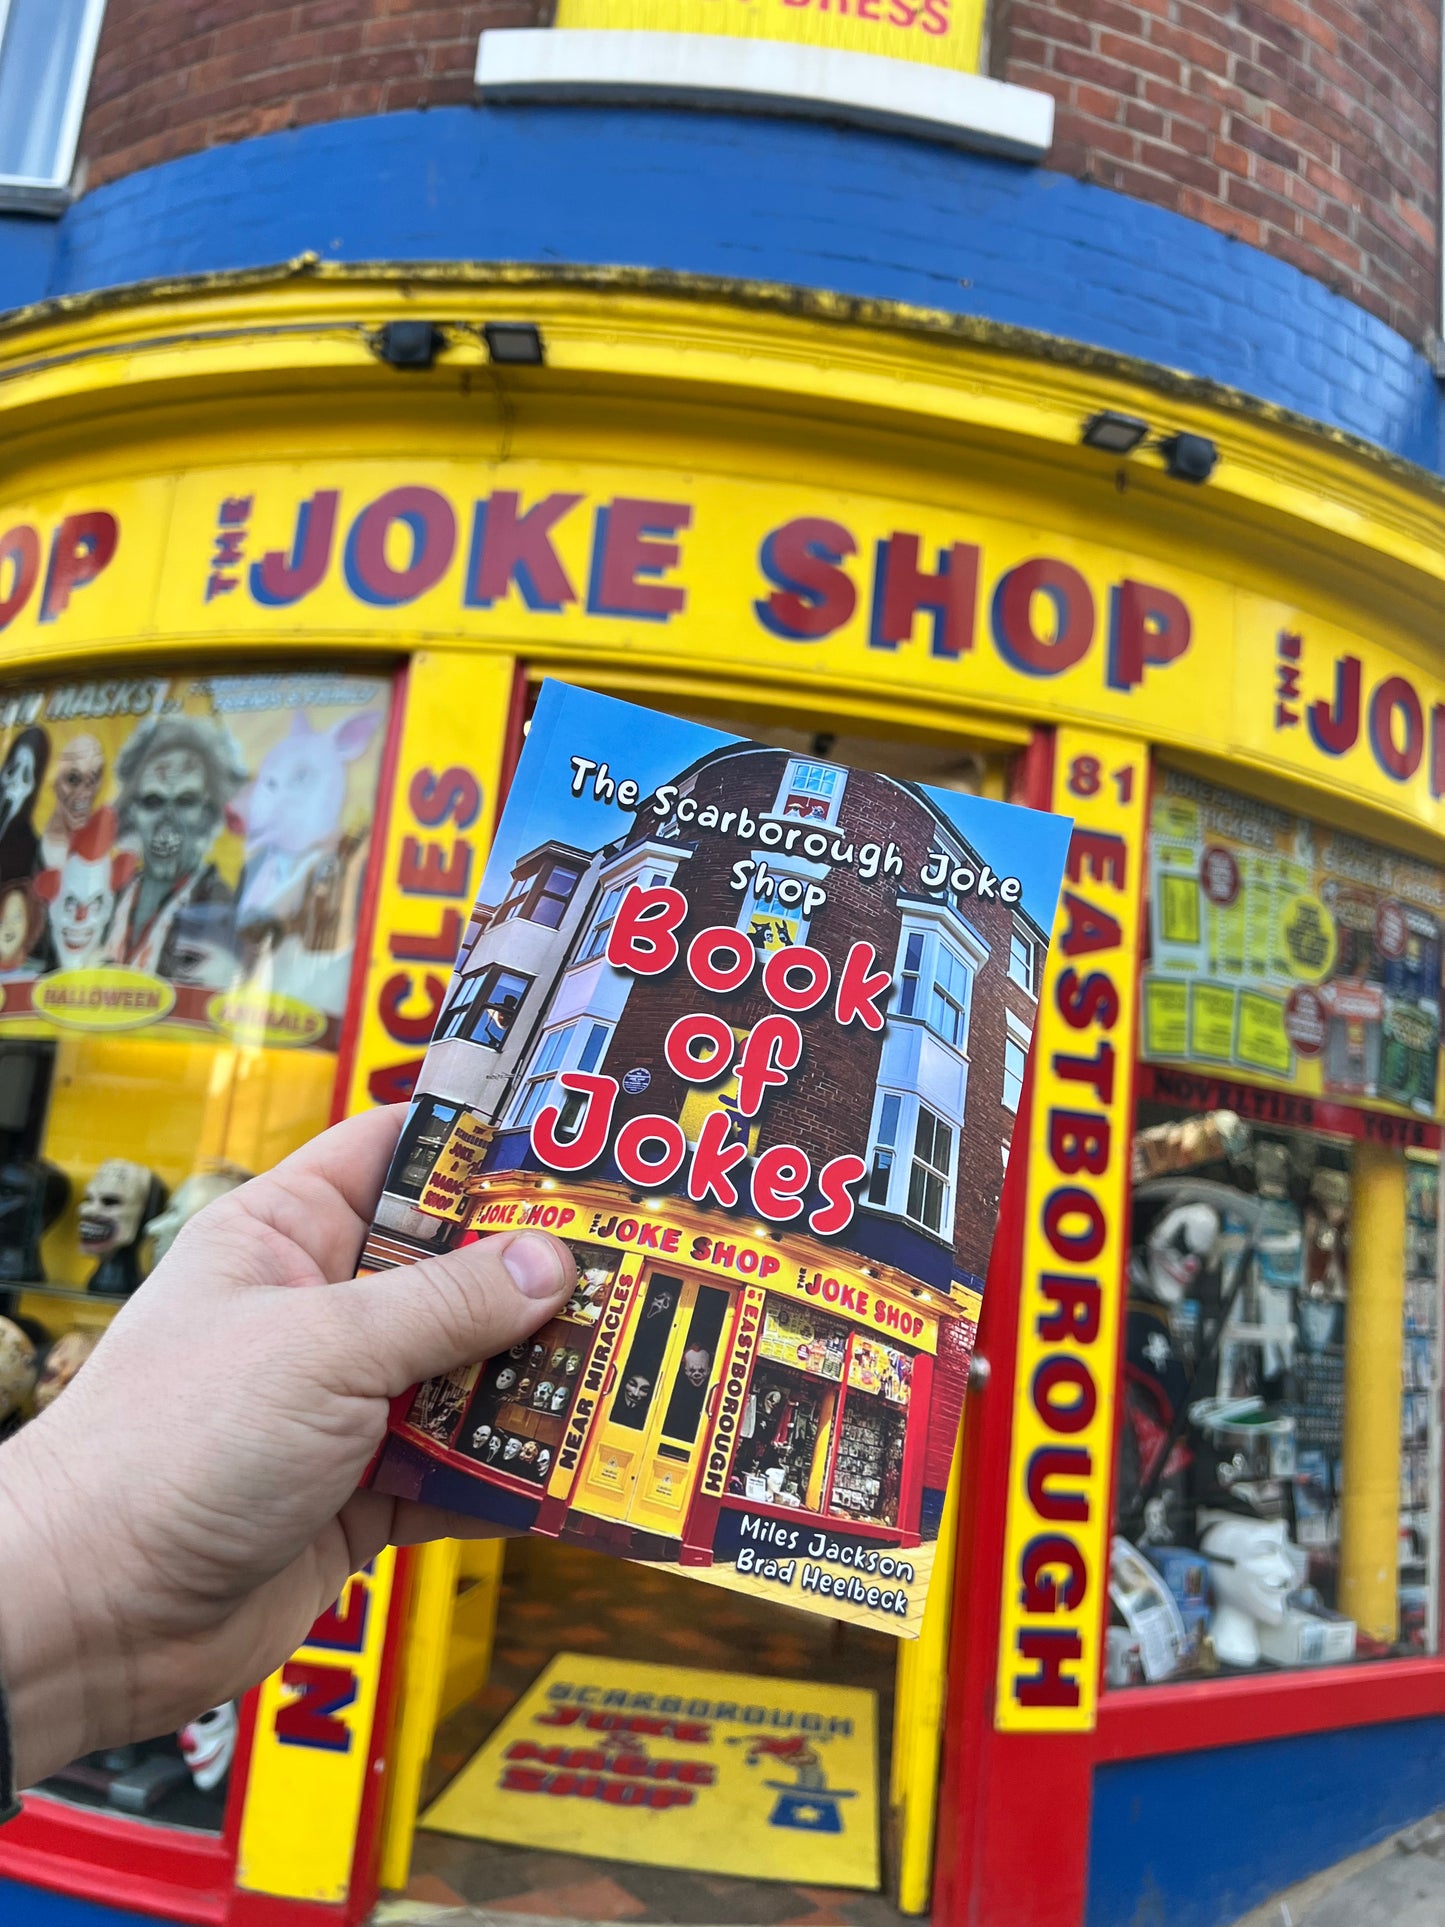 The Scarborough Joke Shop Book of Jokes